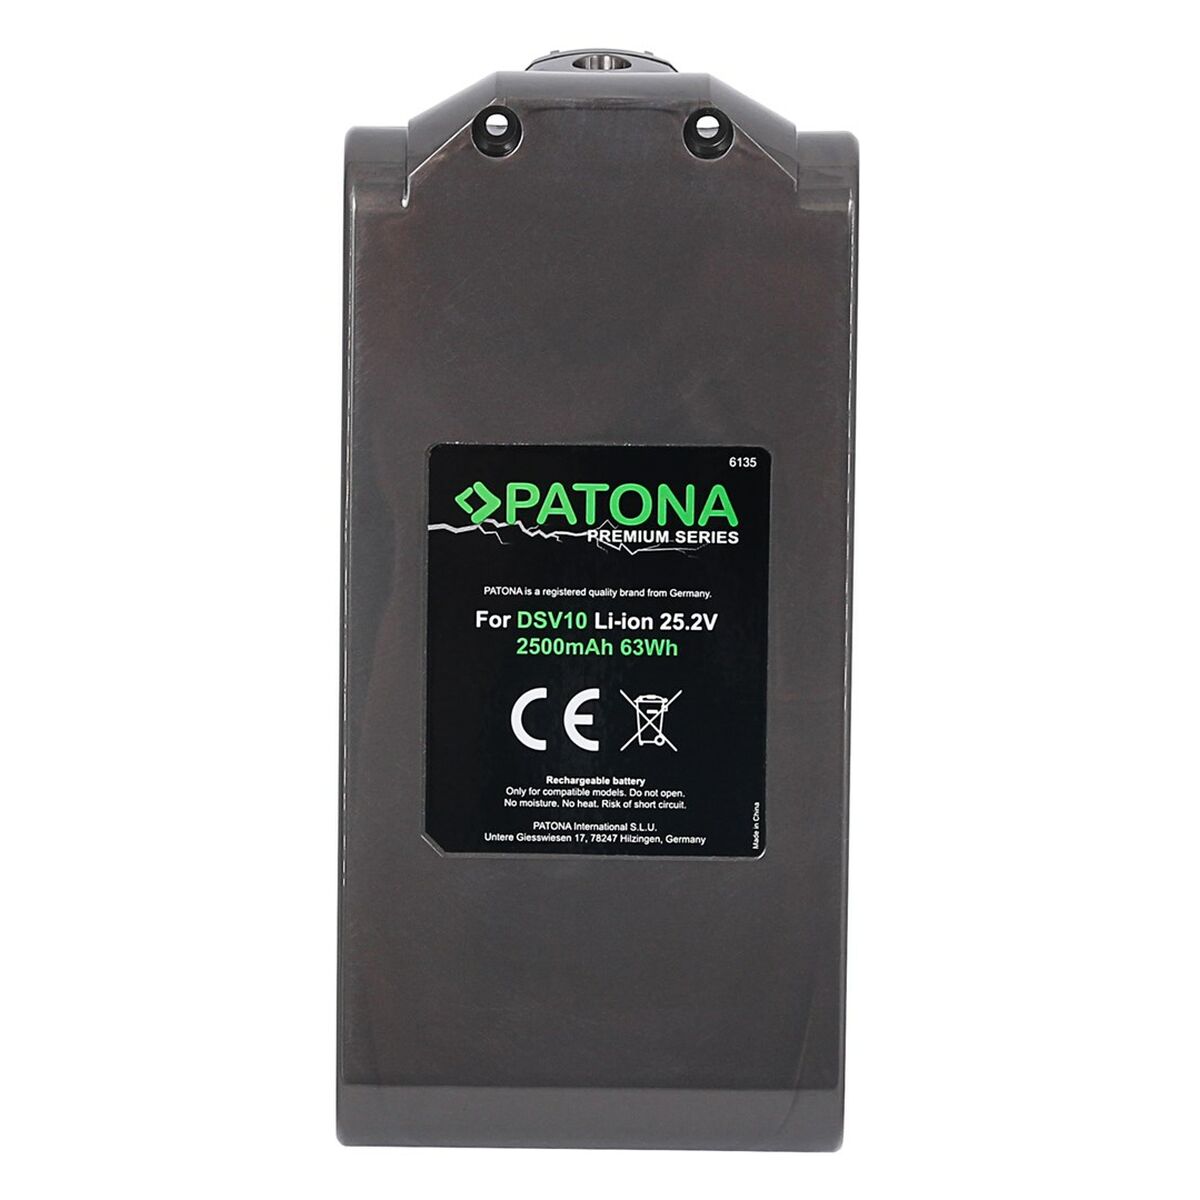 Staubsauger-Batterie Patona Premium Dyson V10 - CA International 